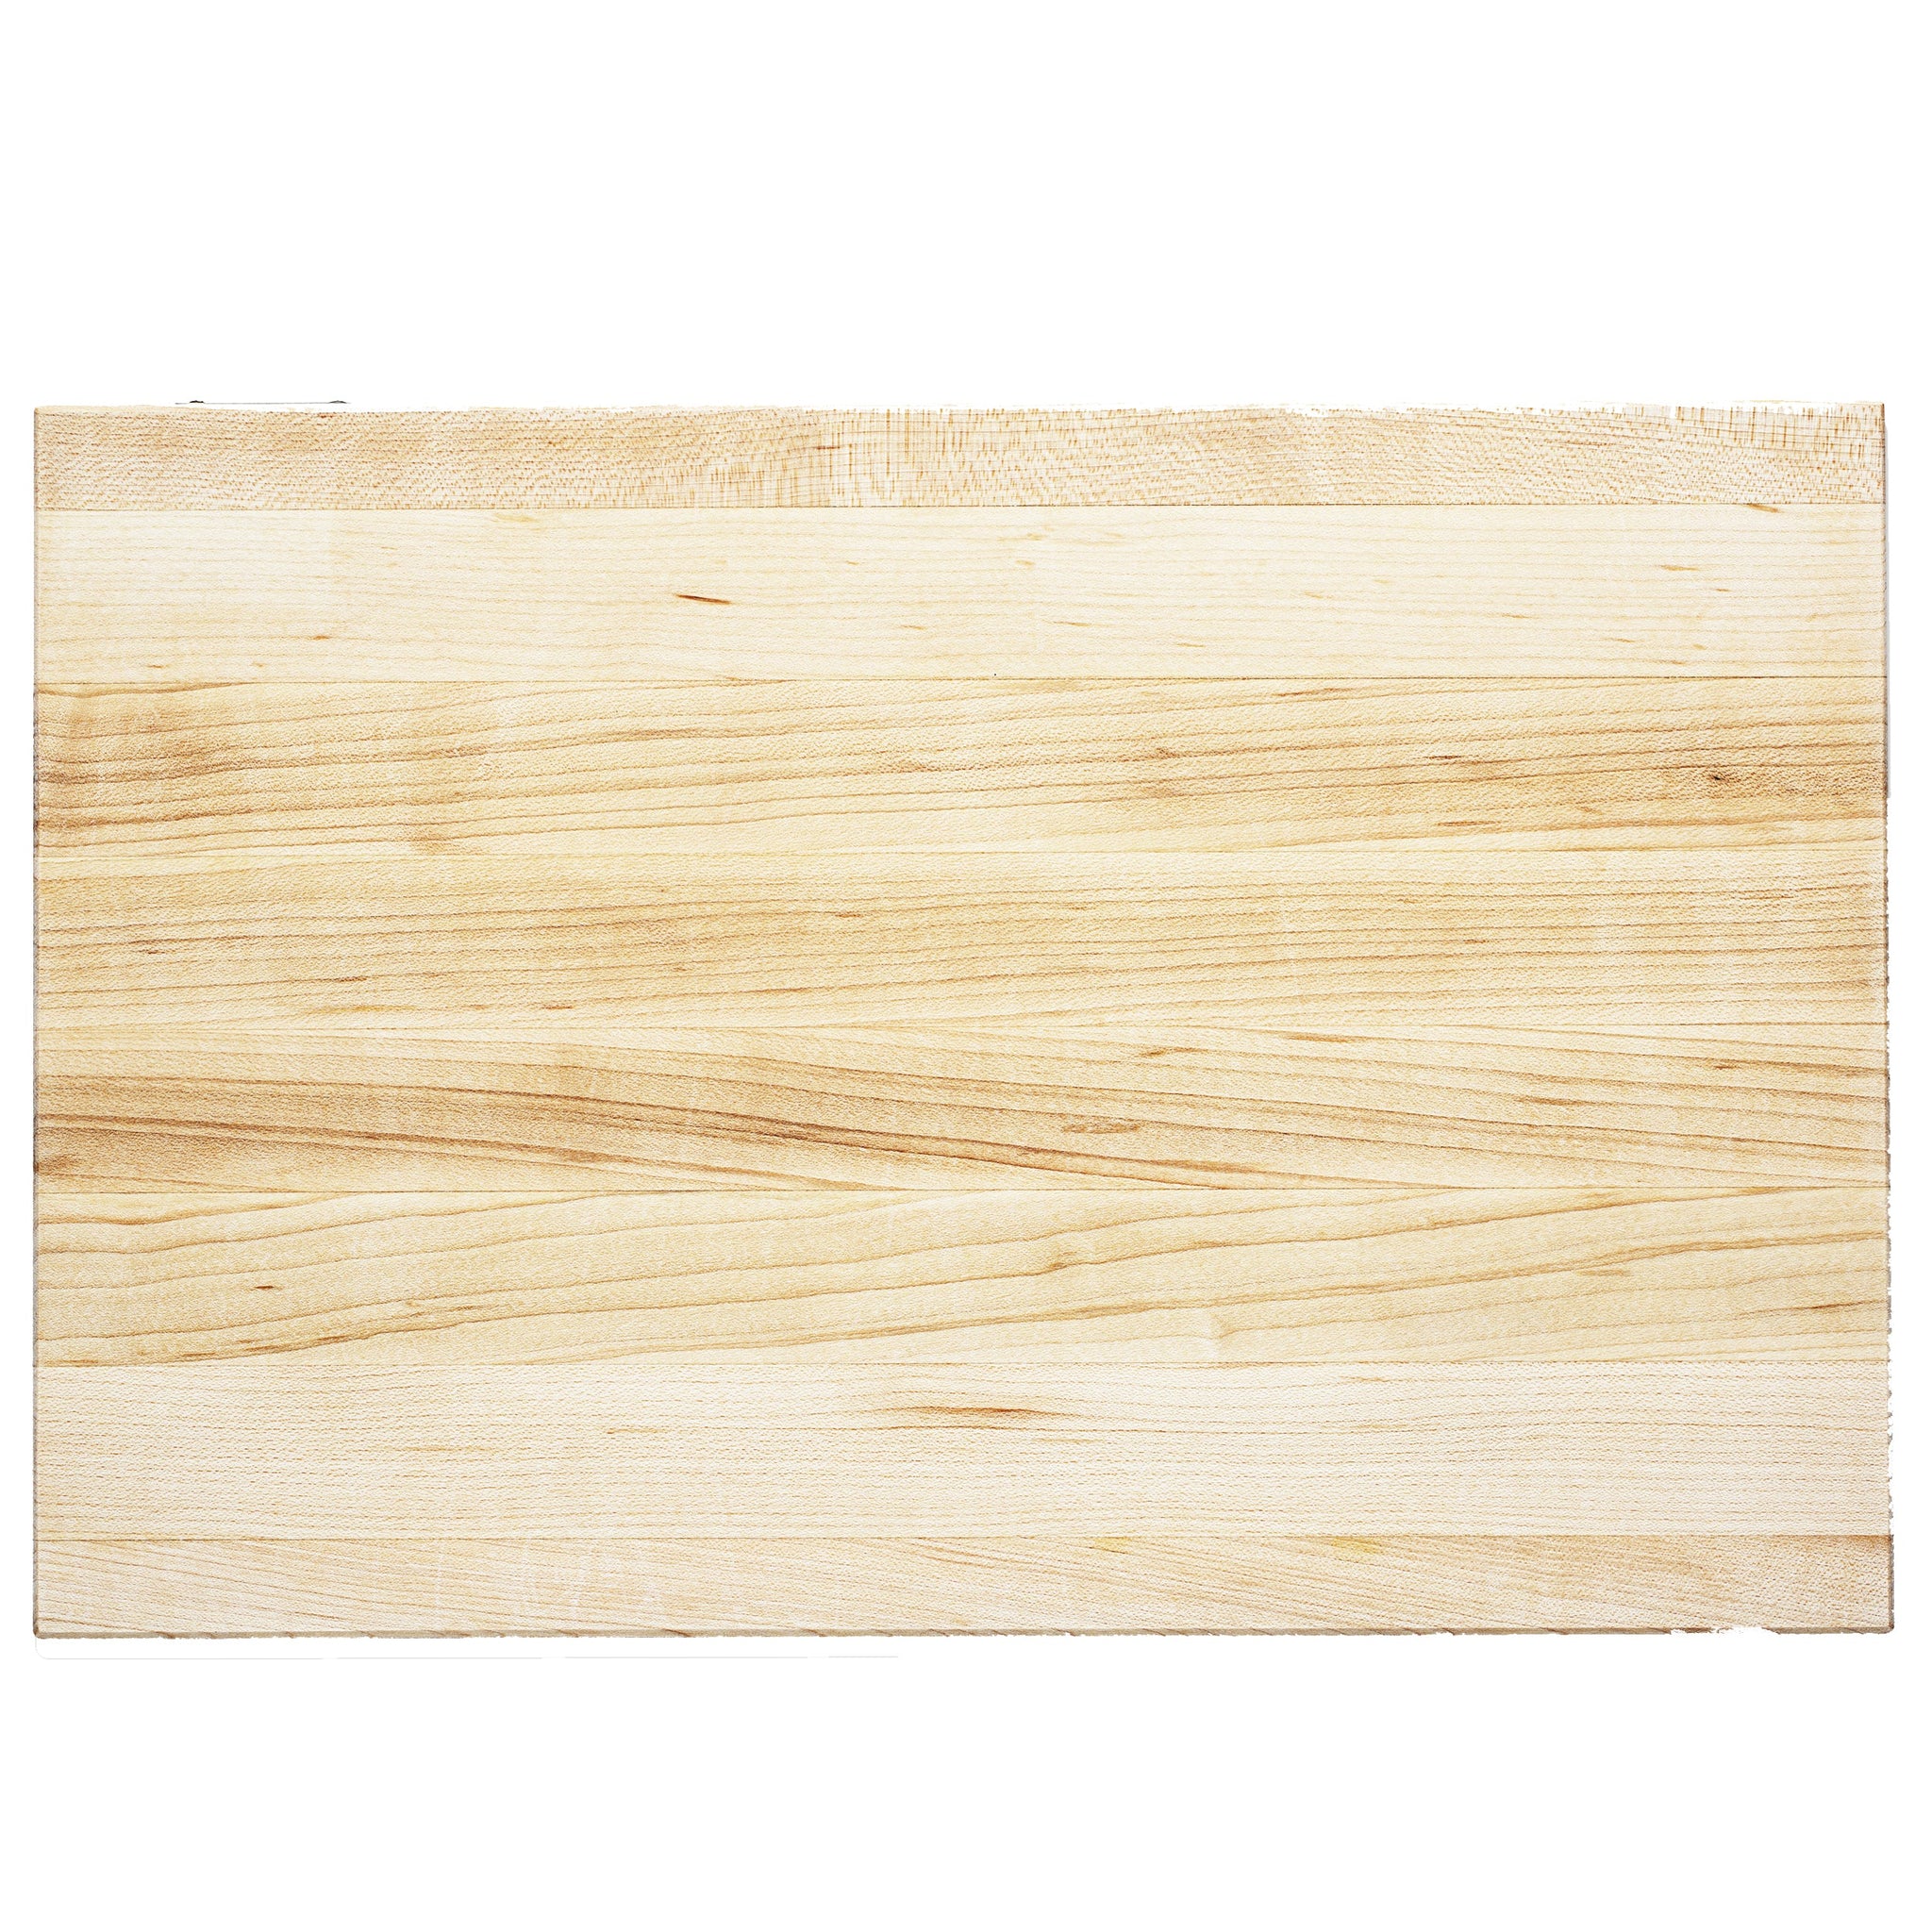 Alice Cutting Board Maple Wood Edge Grain Handmade ( with free gift)